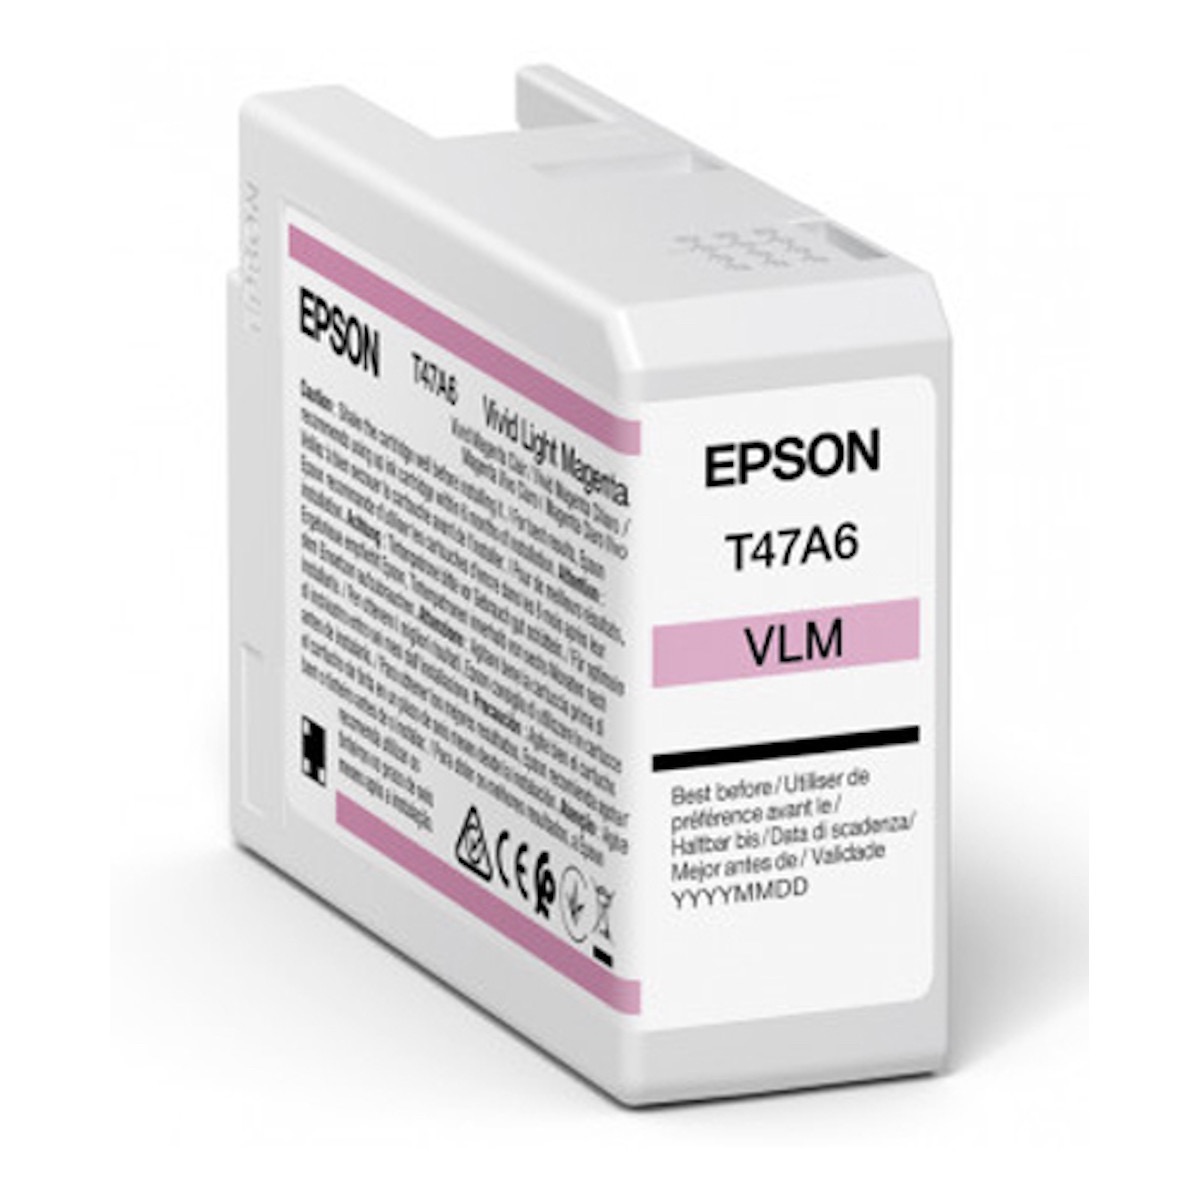 Epson T47A6 vivid light magenta Tinte